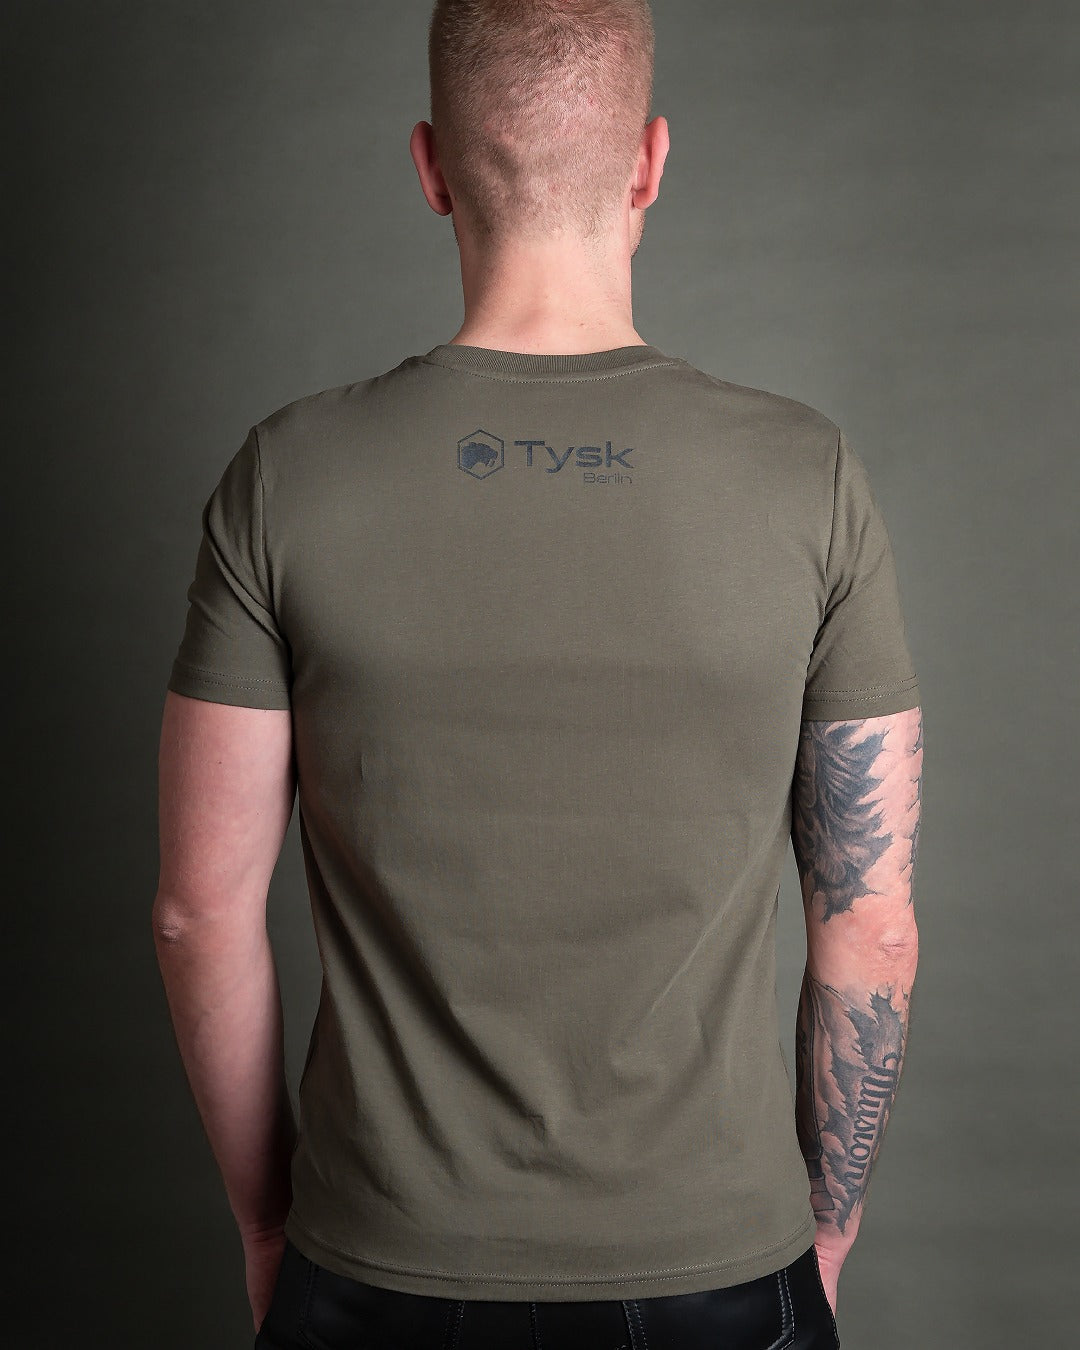 T-Shirt mit großem Tysk-Logo